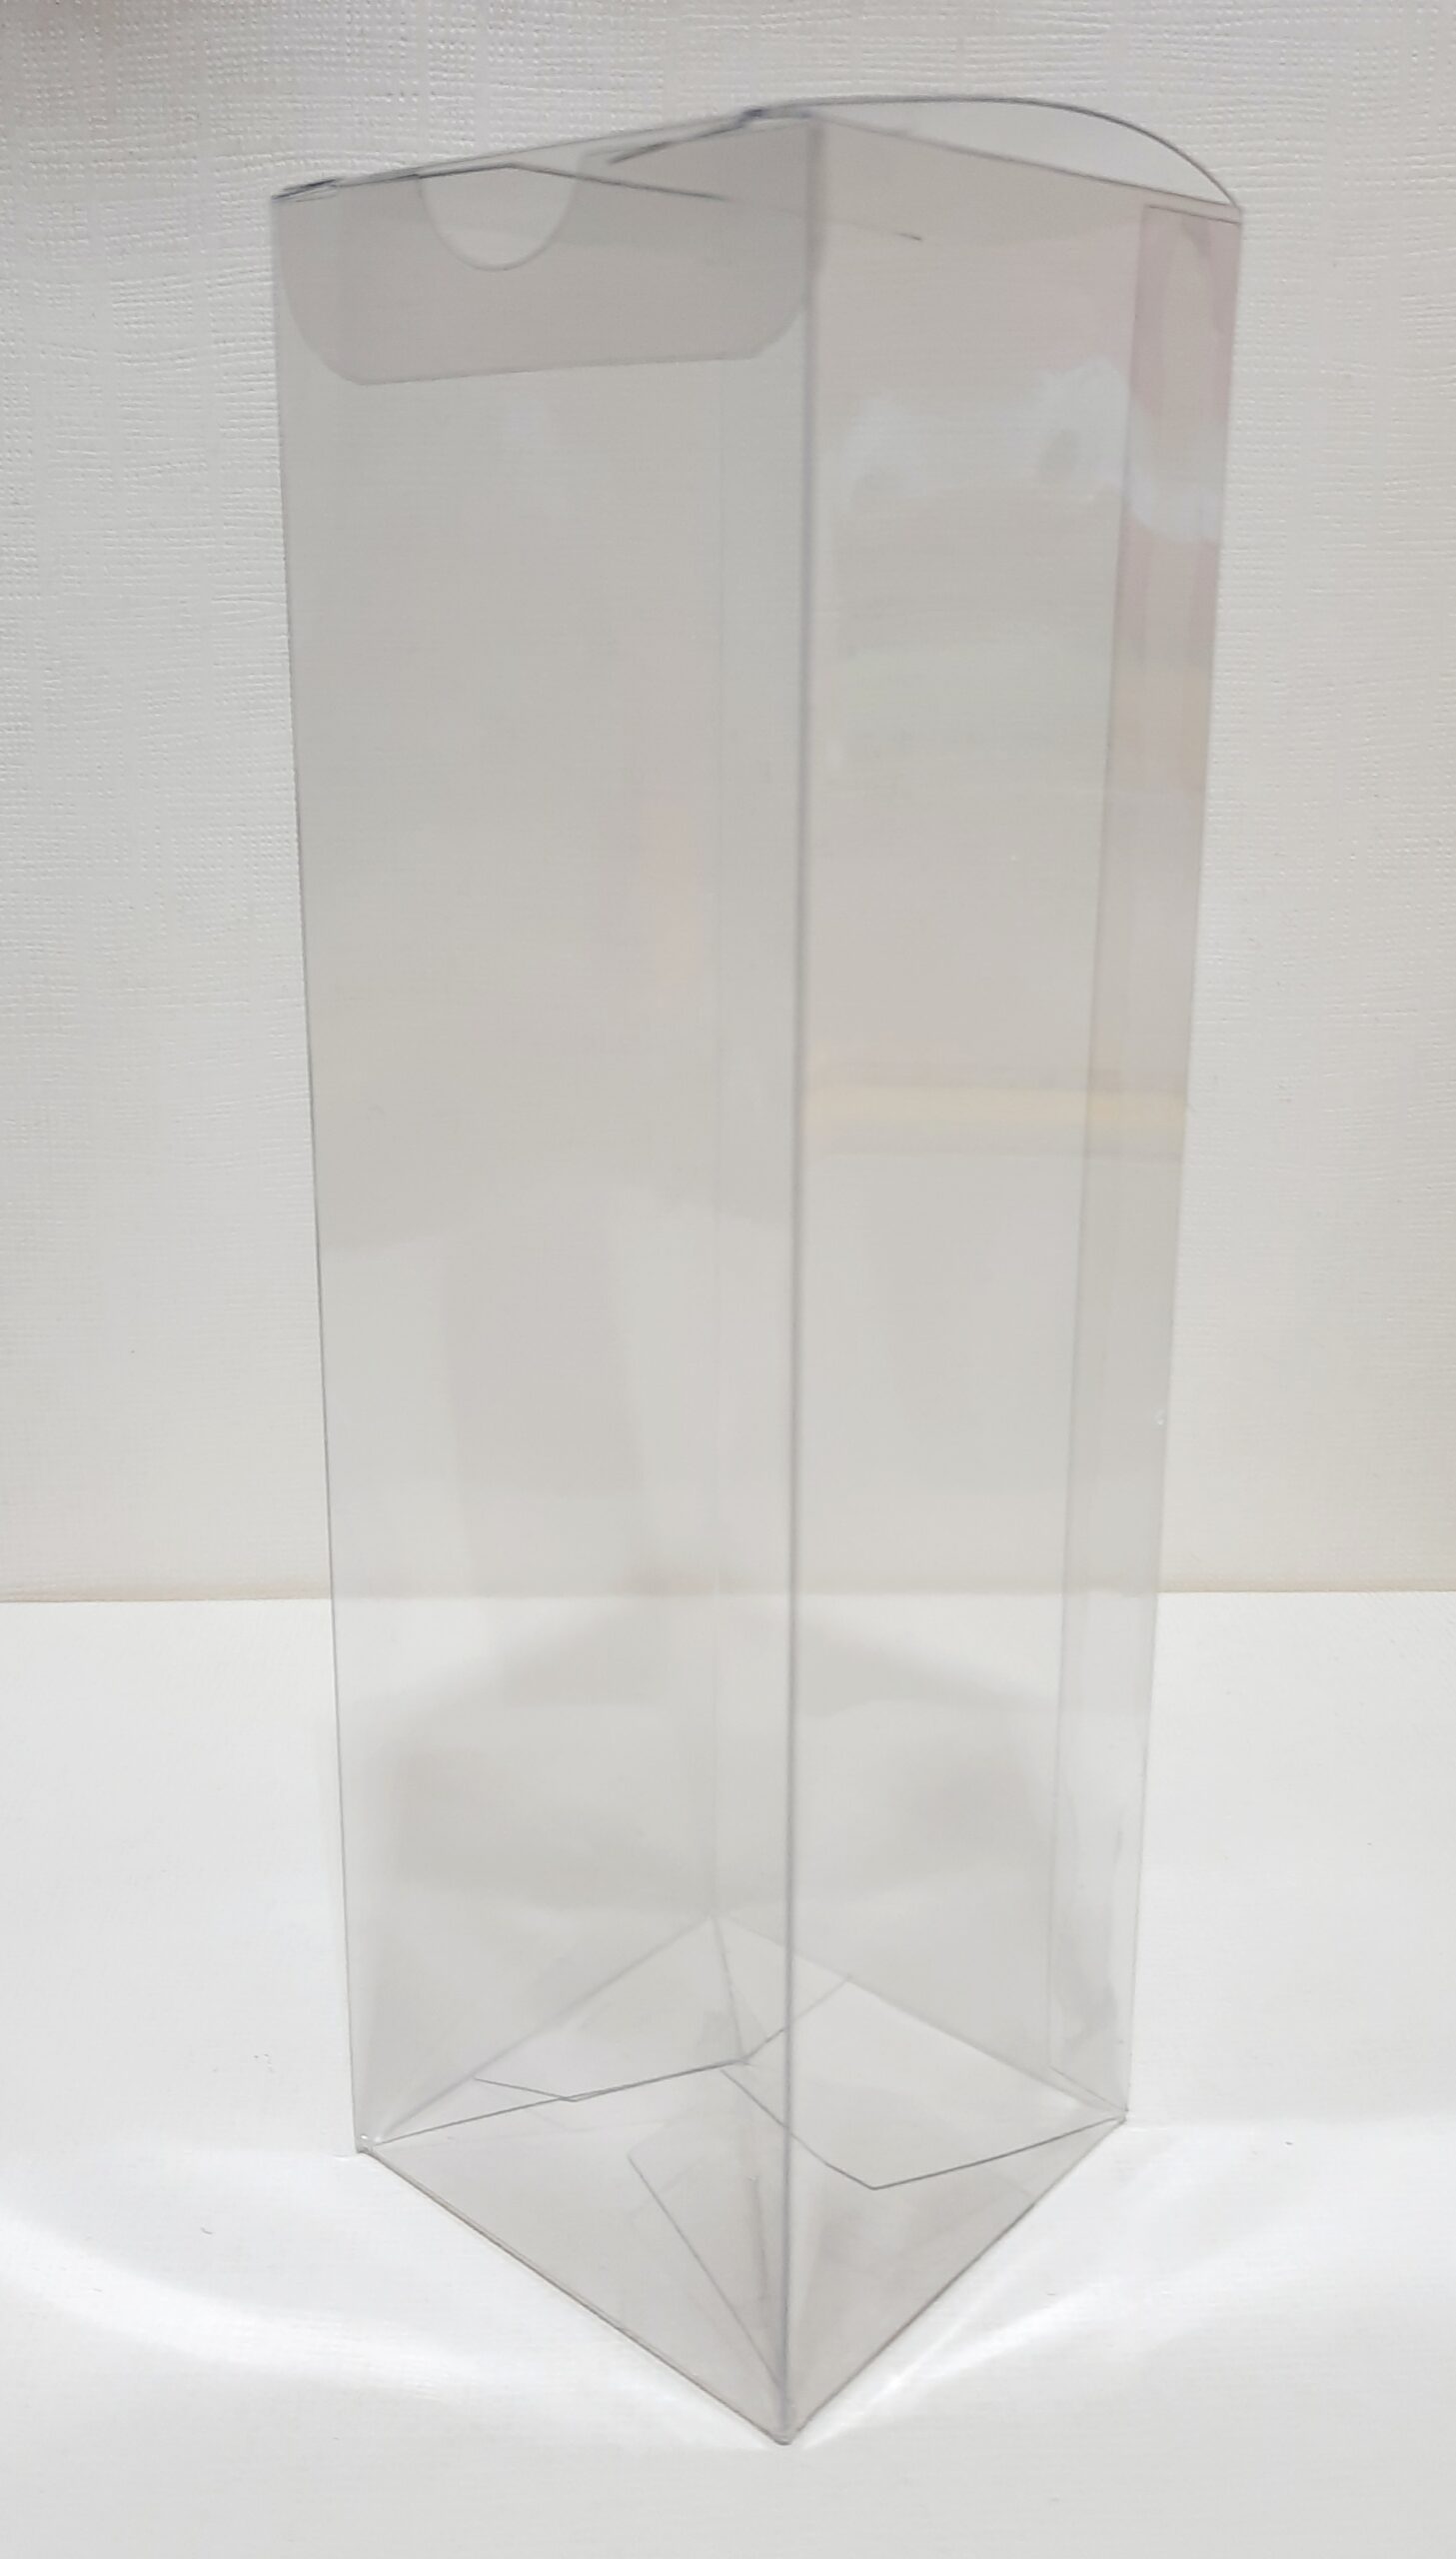 Scatola Plexiglass Quadra 8x8x8 Cm Trasparente Bomboniere Fai da Te